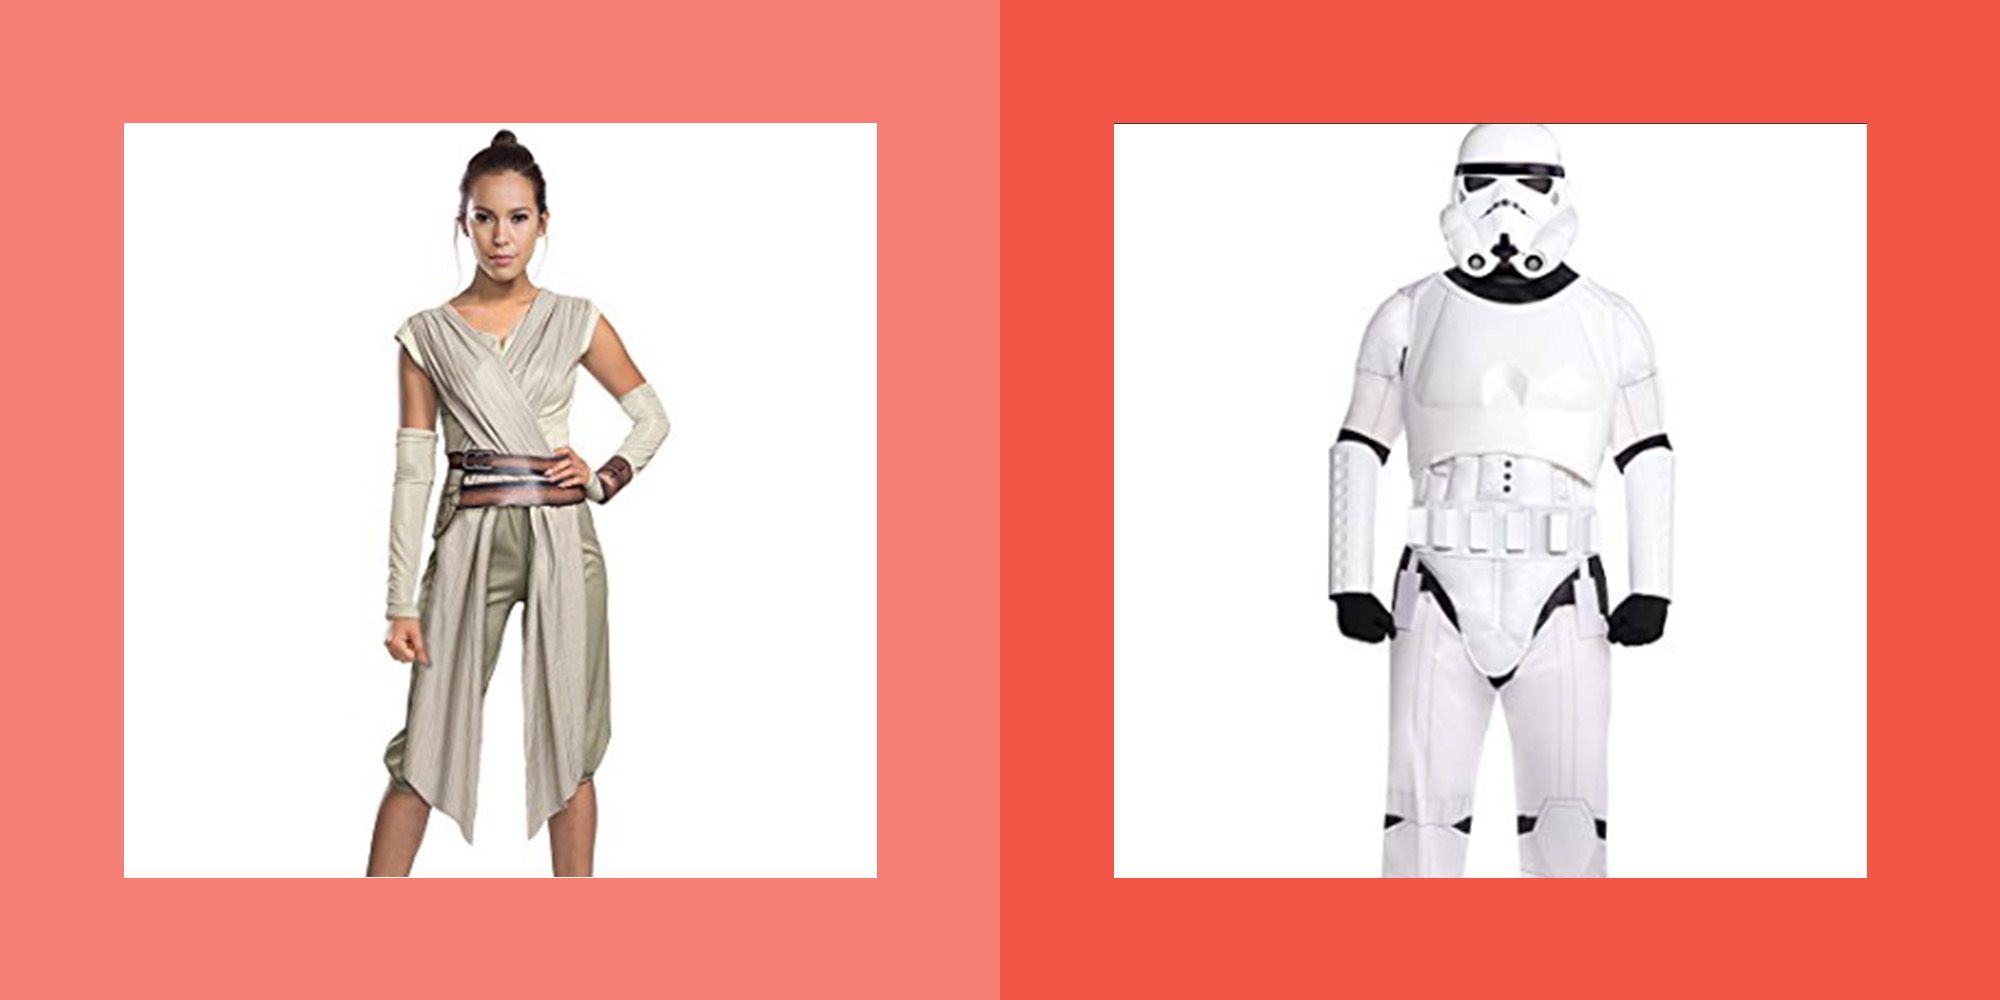 Star Wars Costume, C3PO Shirts, Star Wars Shirts, Star Wars